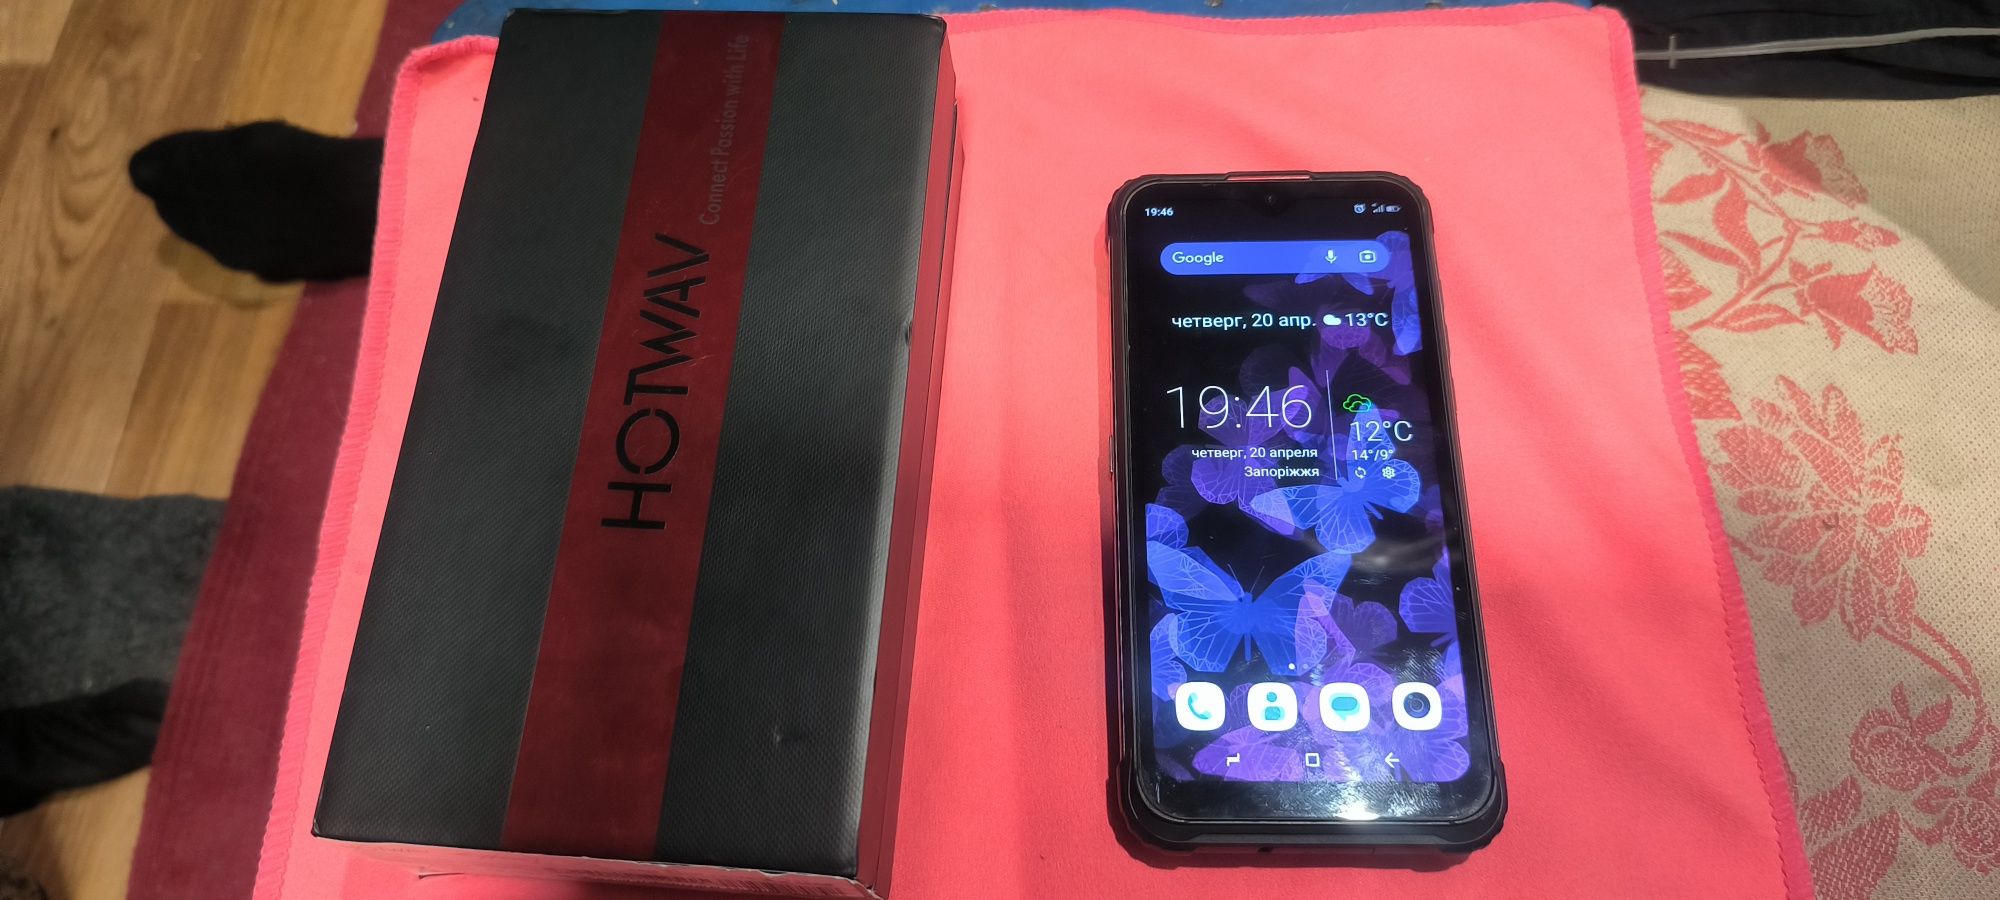 Hotwav cyber 7 смартфон монстр з супер захистом та потужною батареєю!